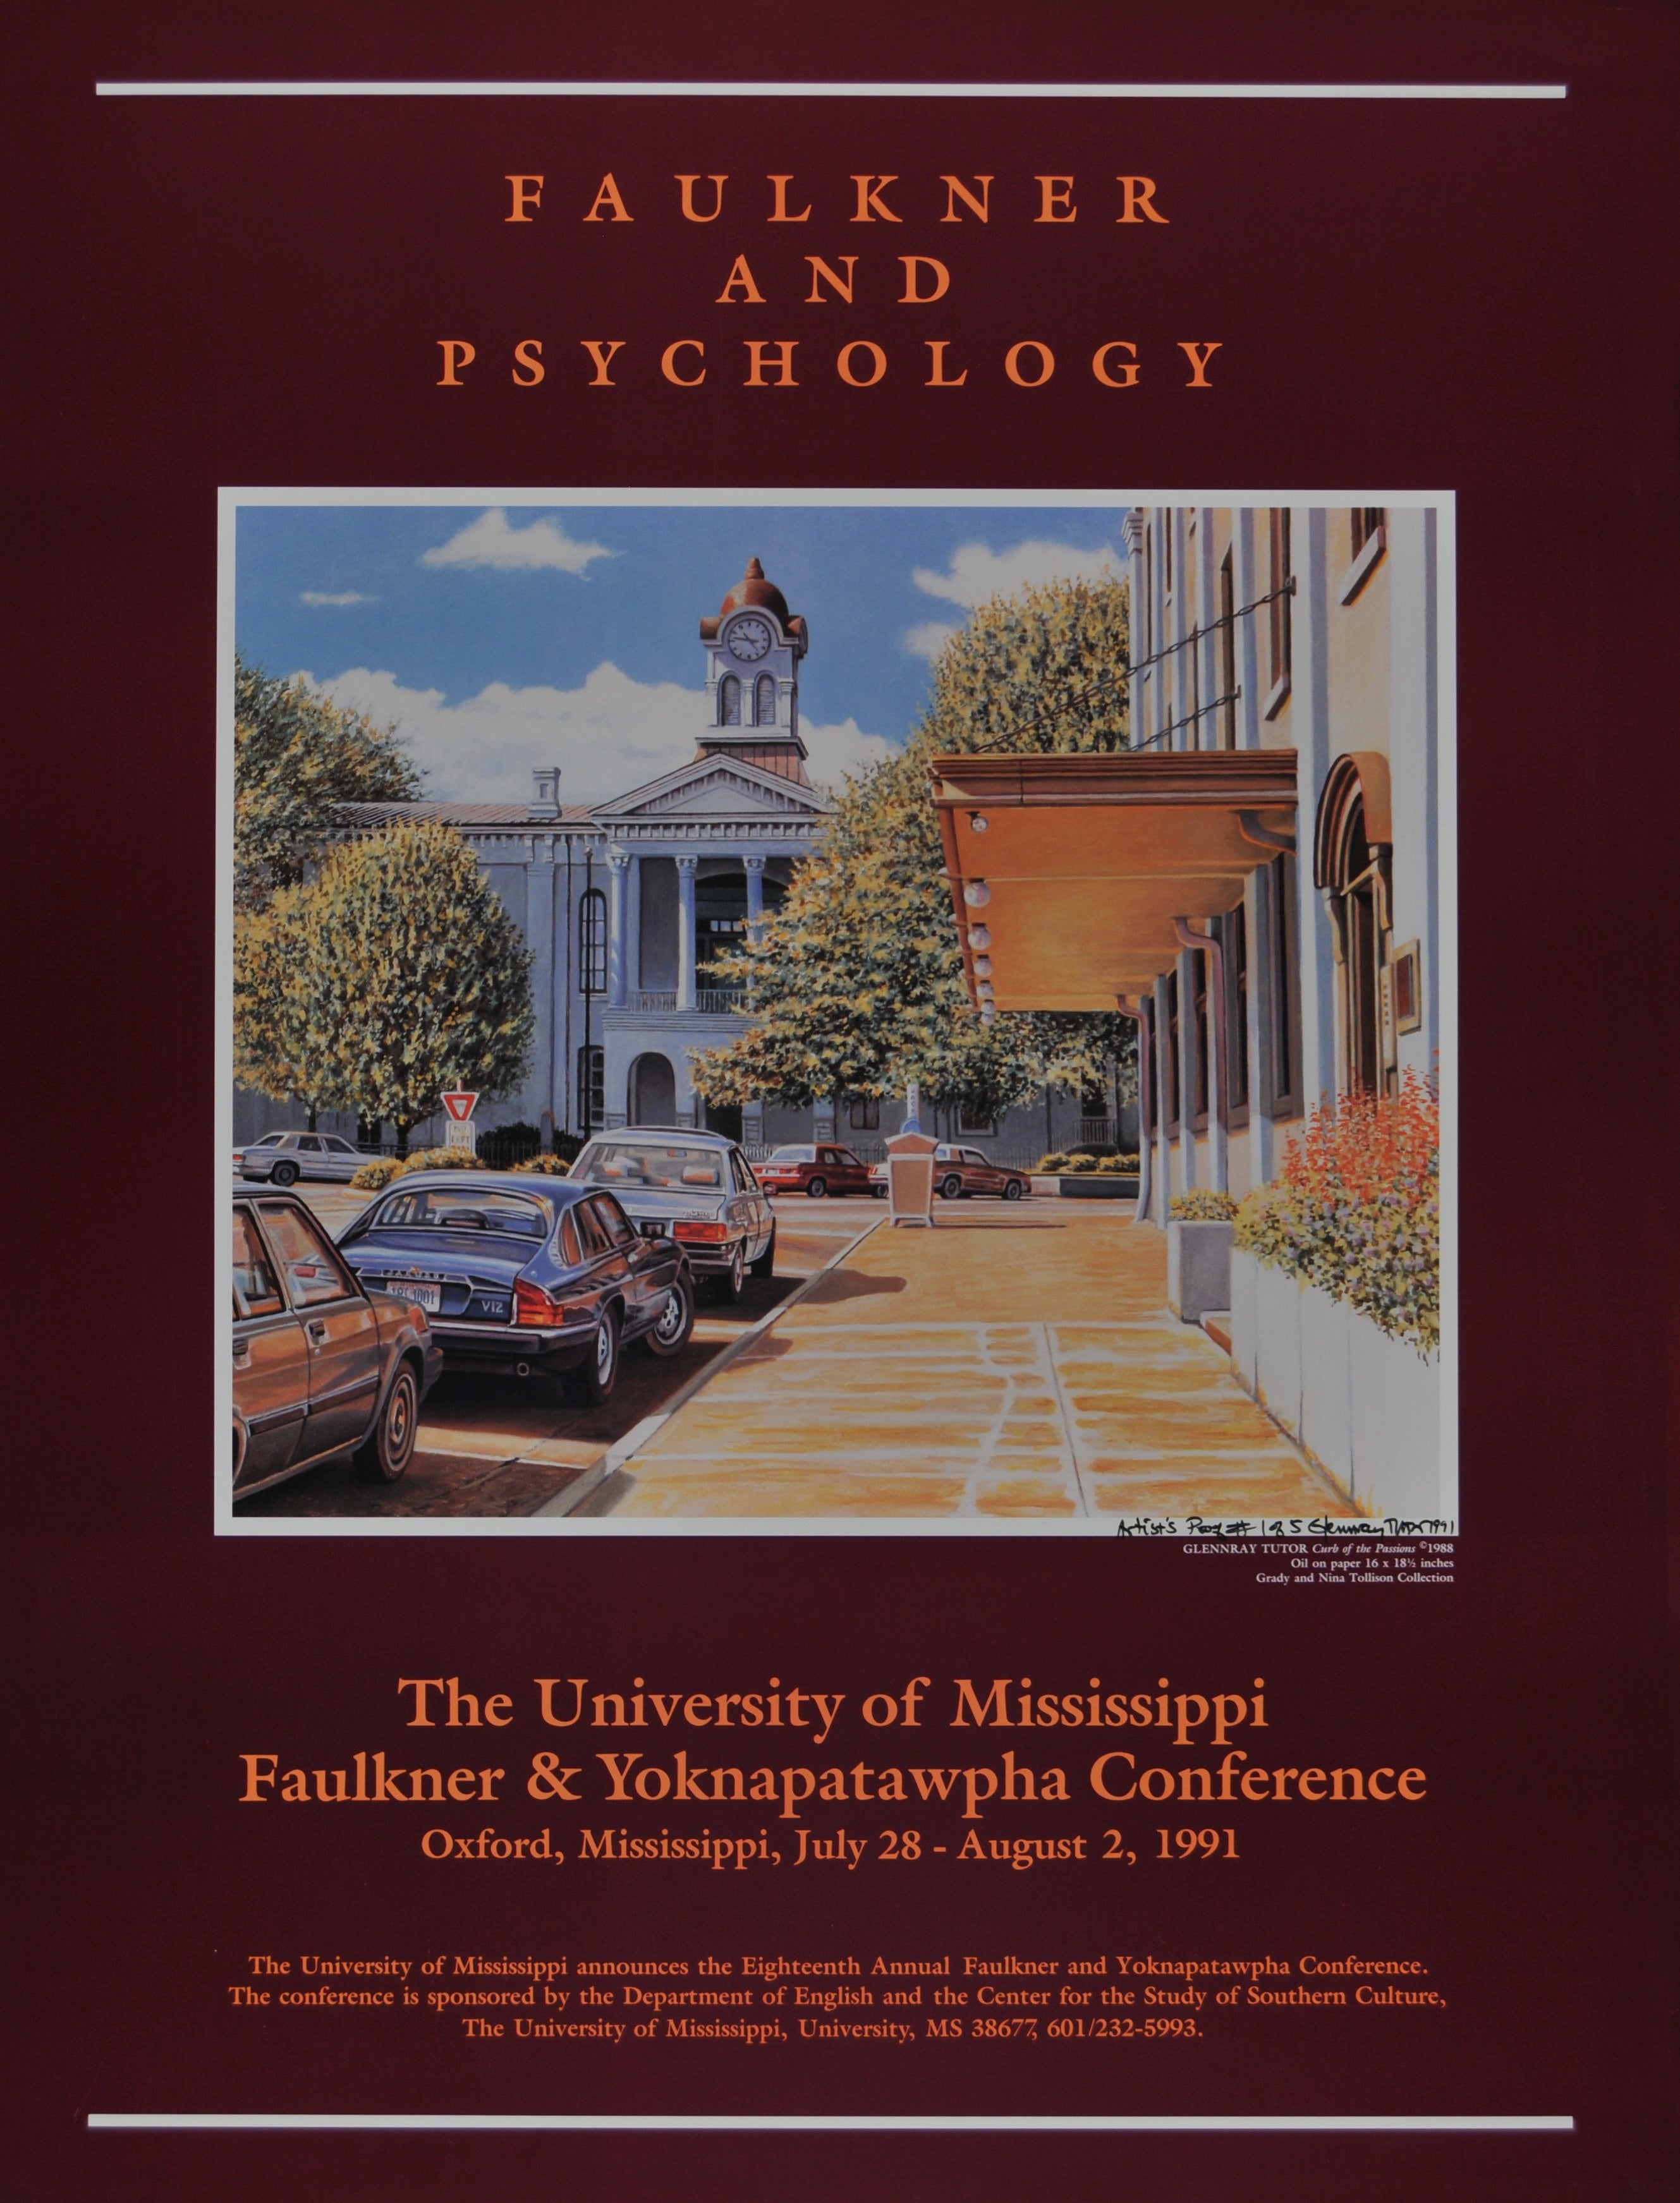 "Faulkner & Psychology"